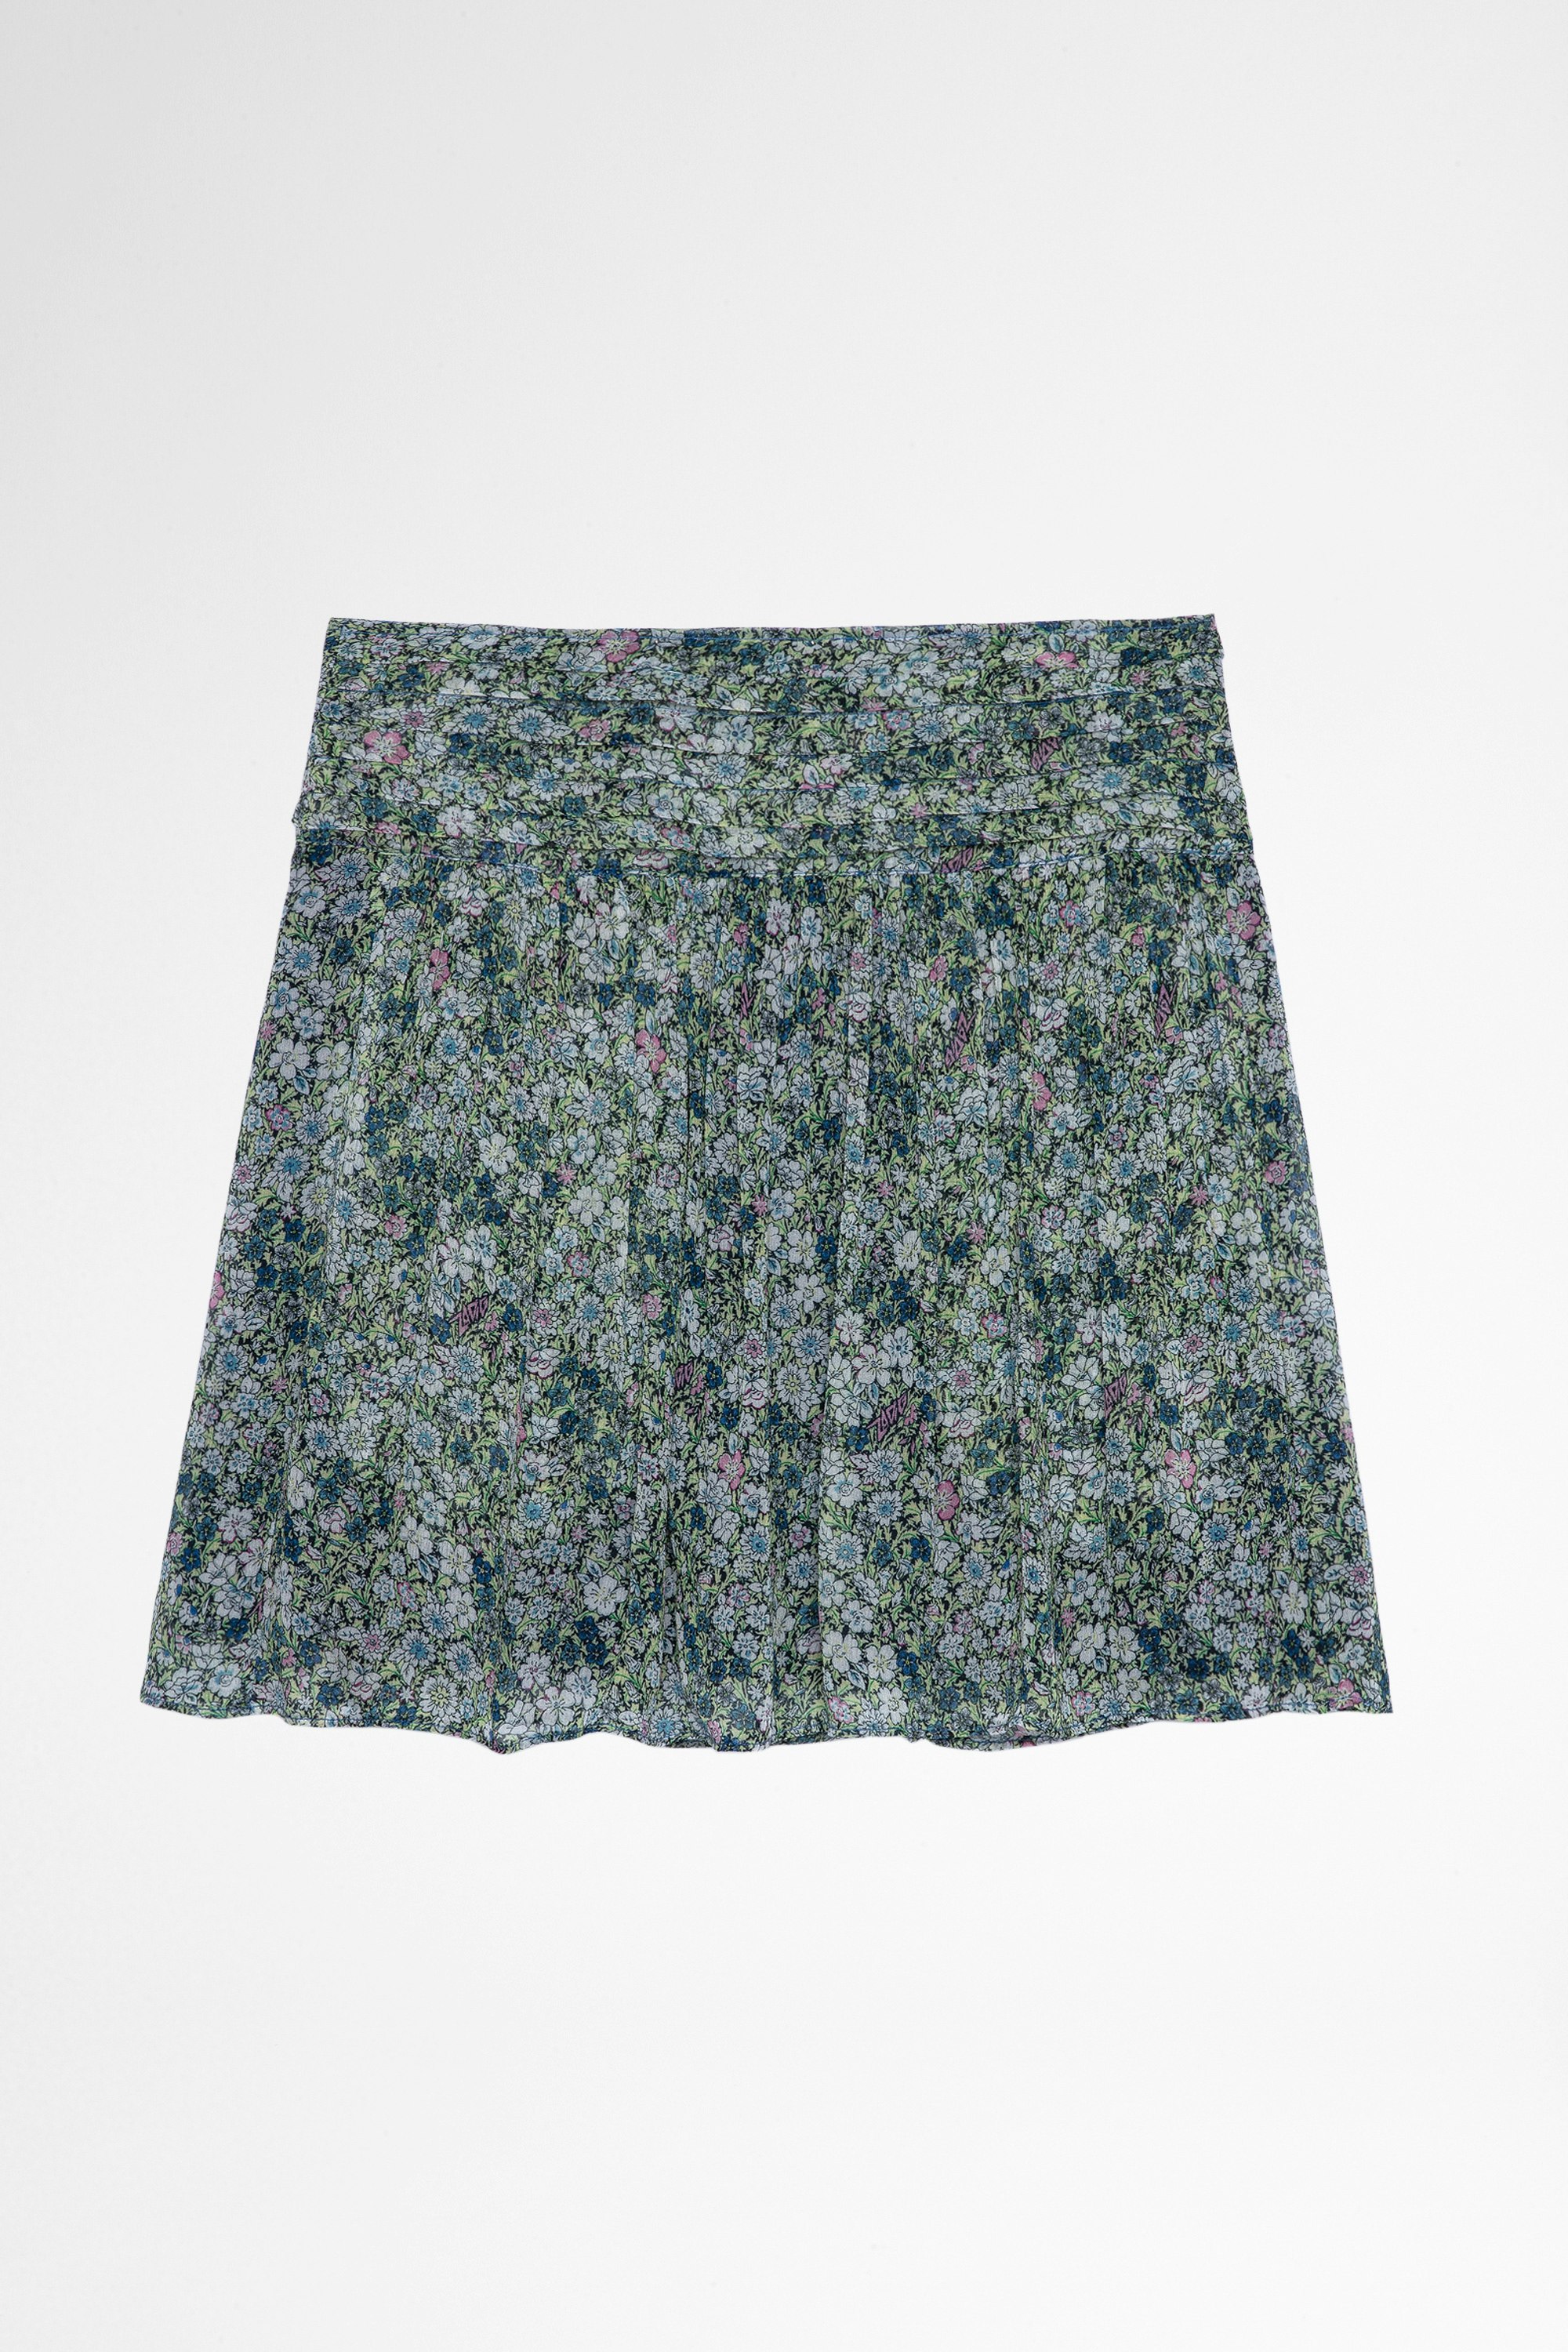 Javala Skirt Women's short skirt with floral print